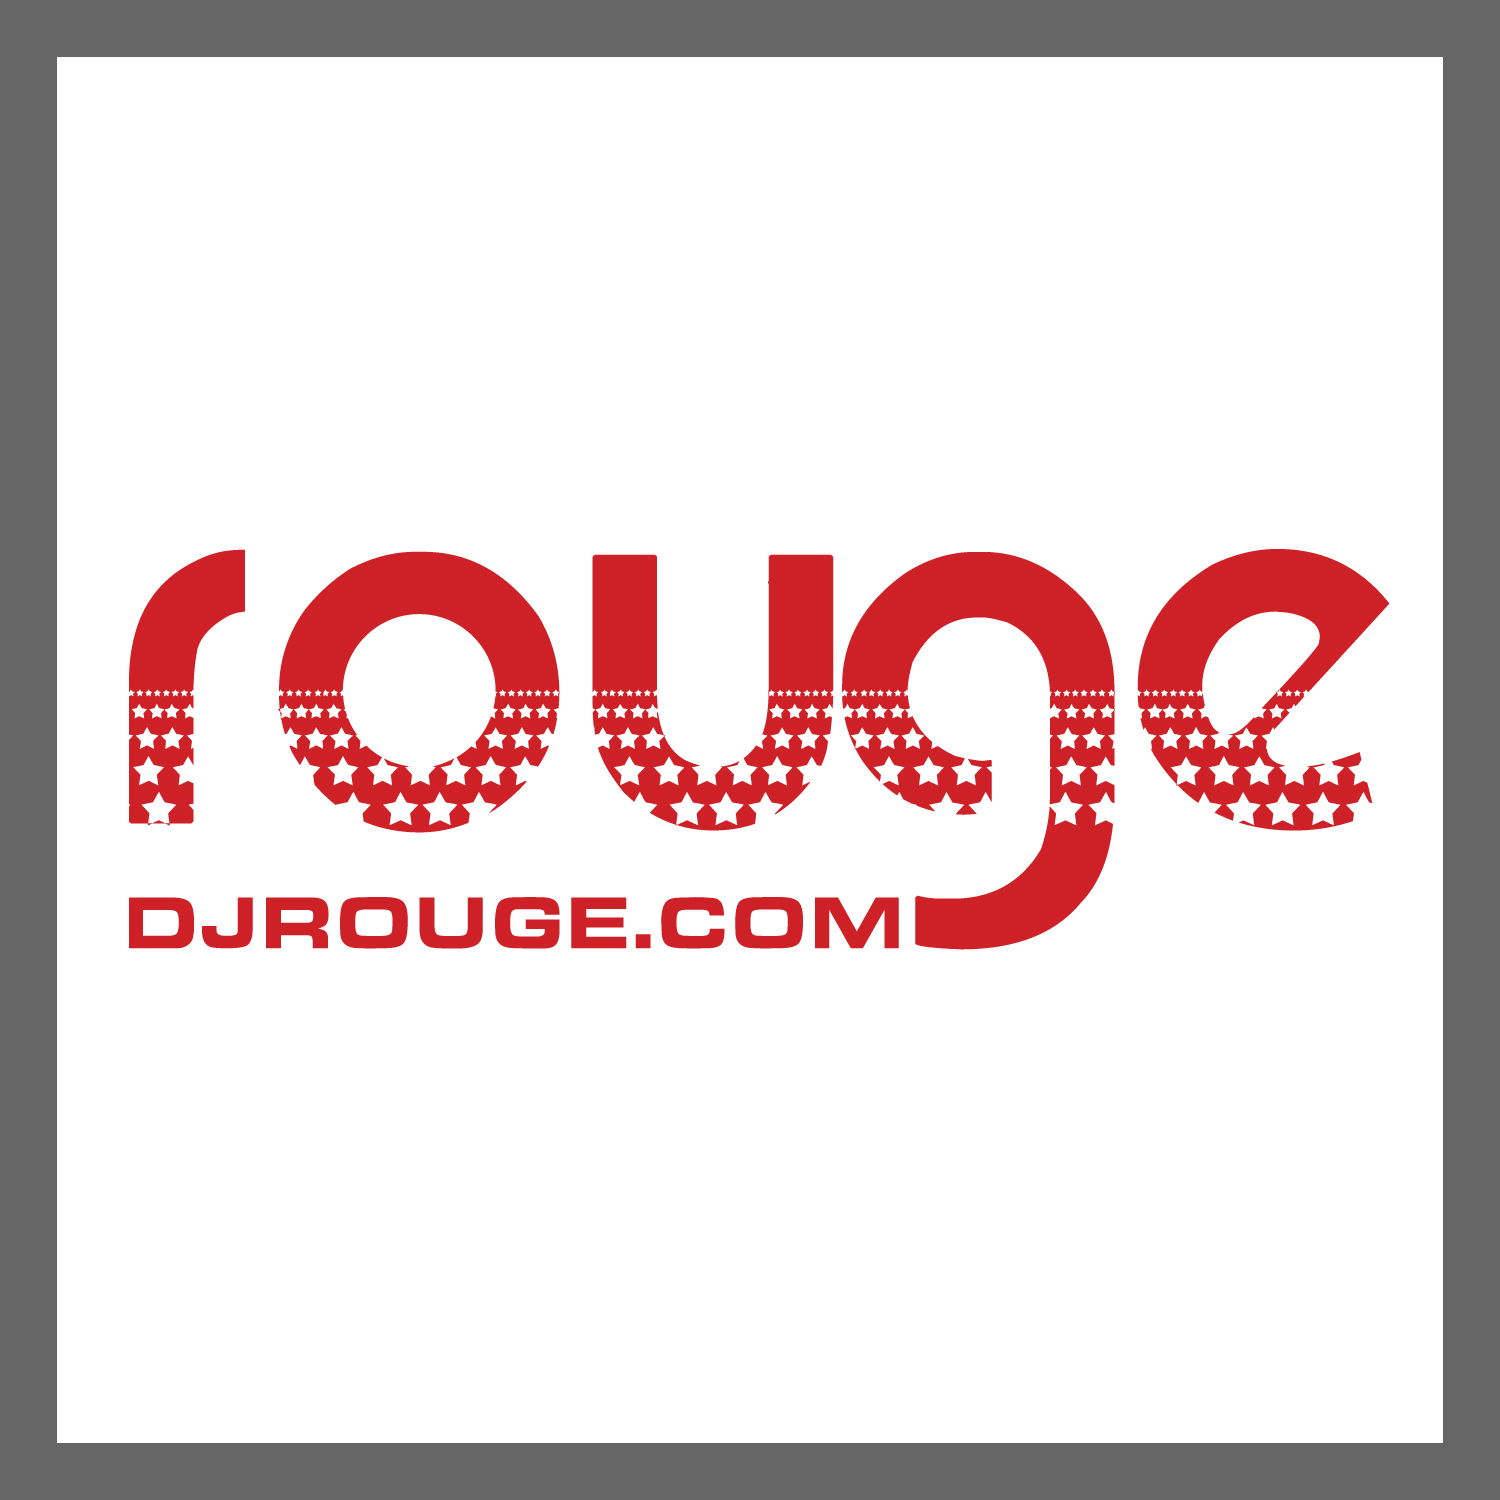 DJ ROUGE - MONTREAL DJ - CORPORATE DJ & WEDDING DJ [MONTREAL, QC]